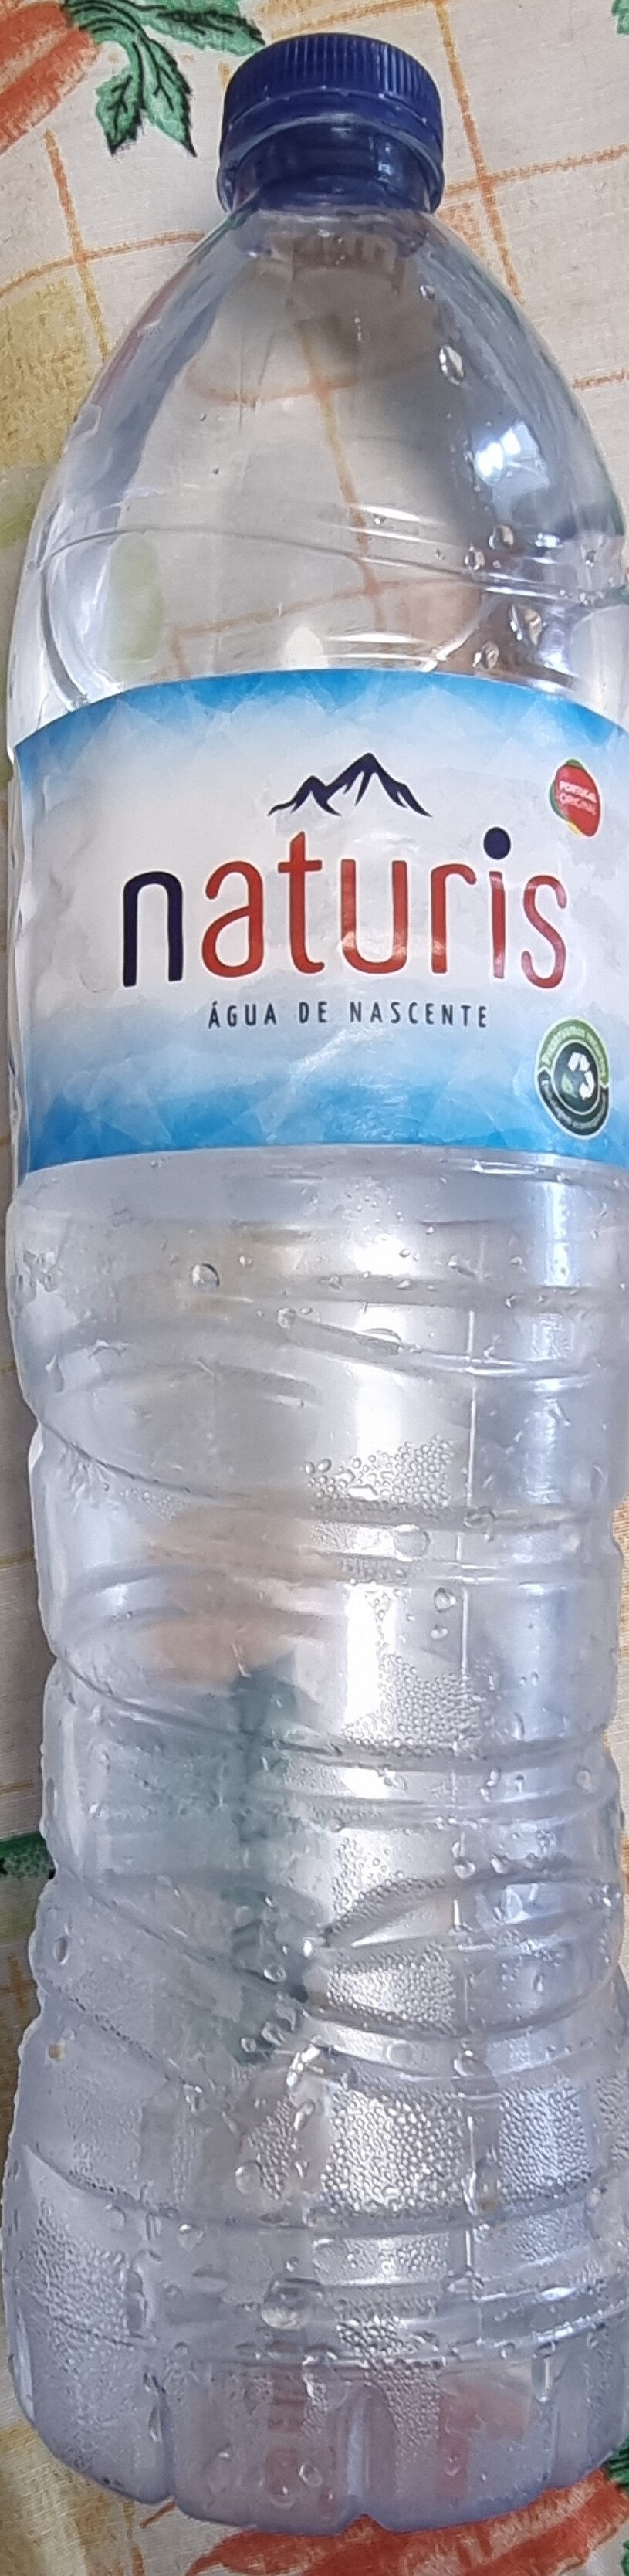 Agua de Nascente - Producto - pt